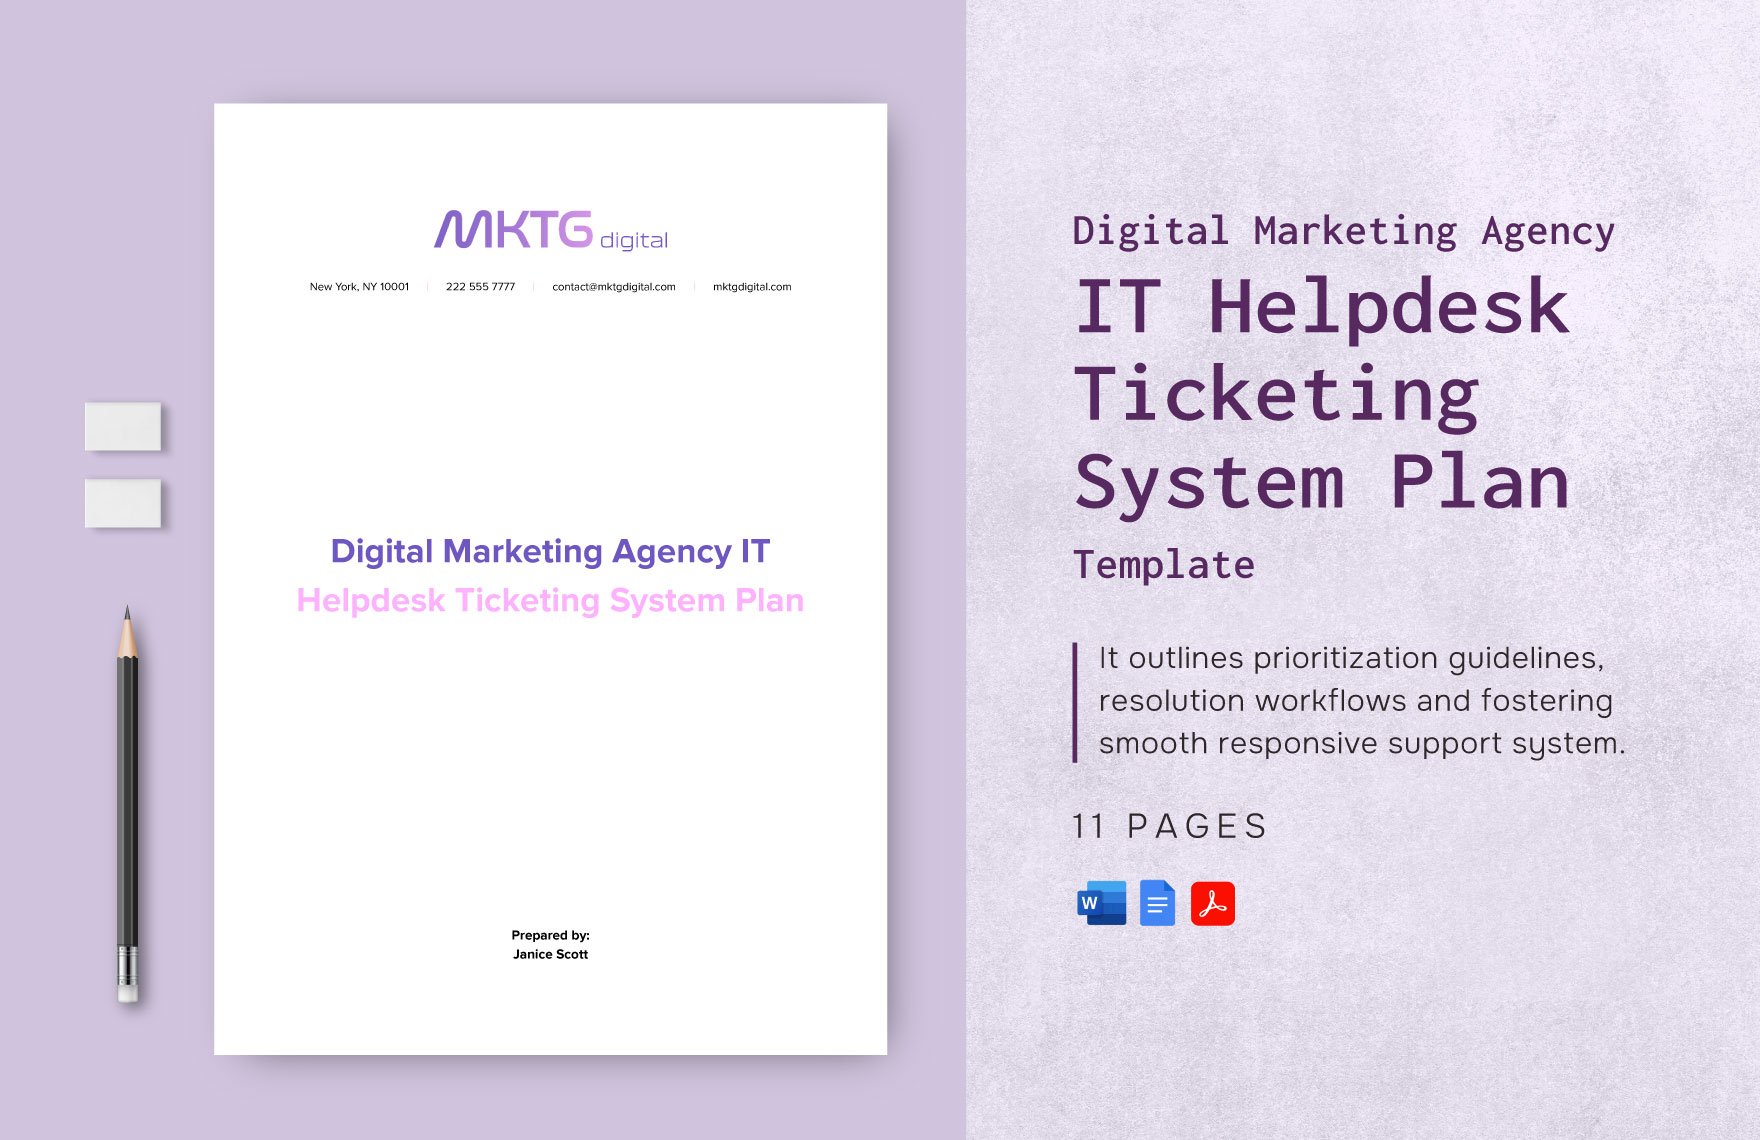 Digital Marketing Agency IT Helpdesk Ticketing System Plan Template